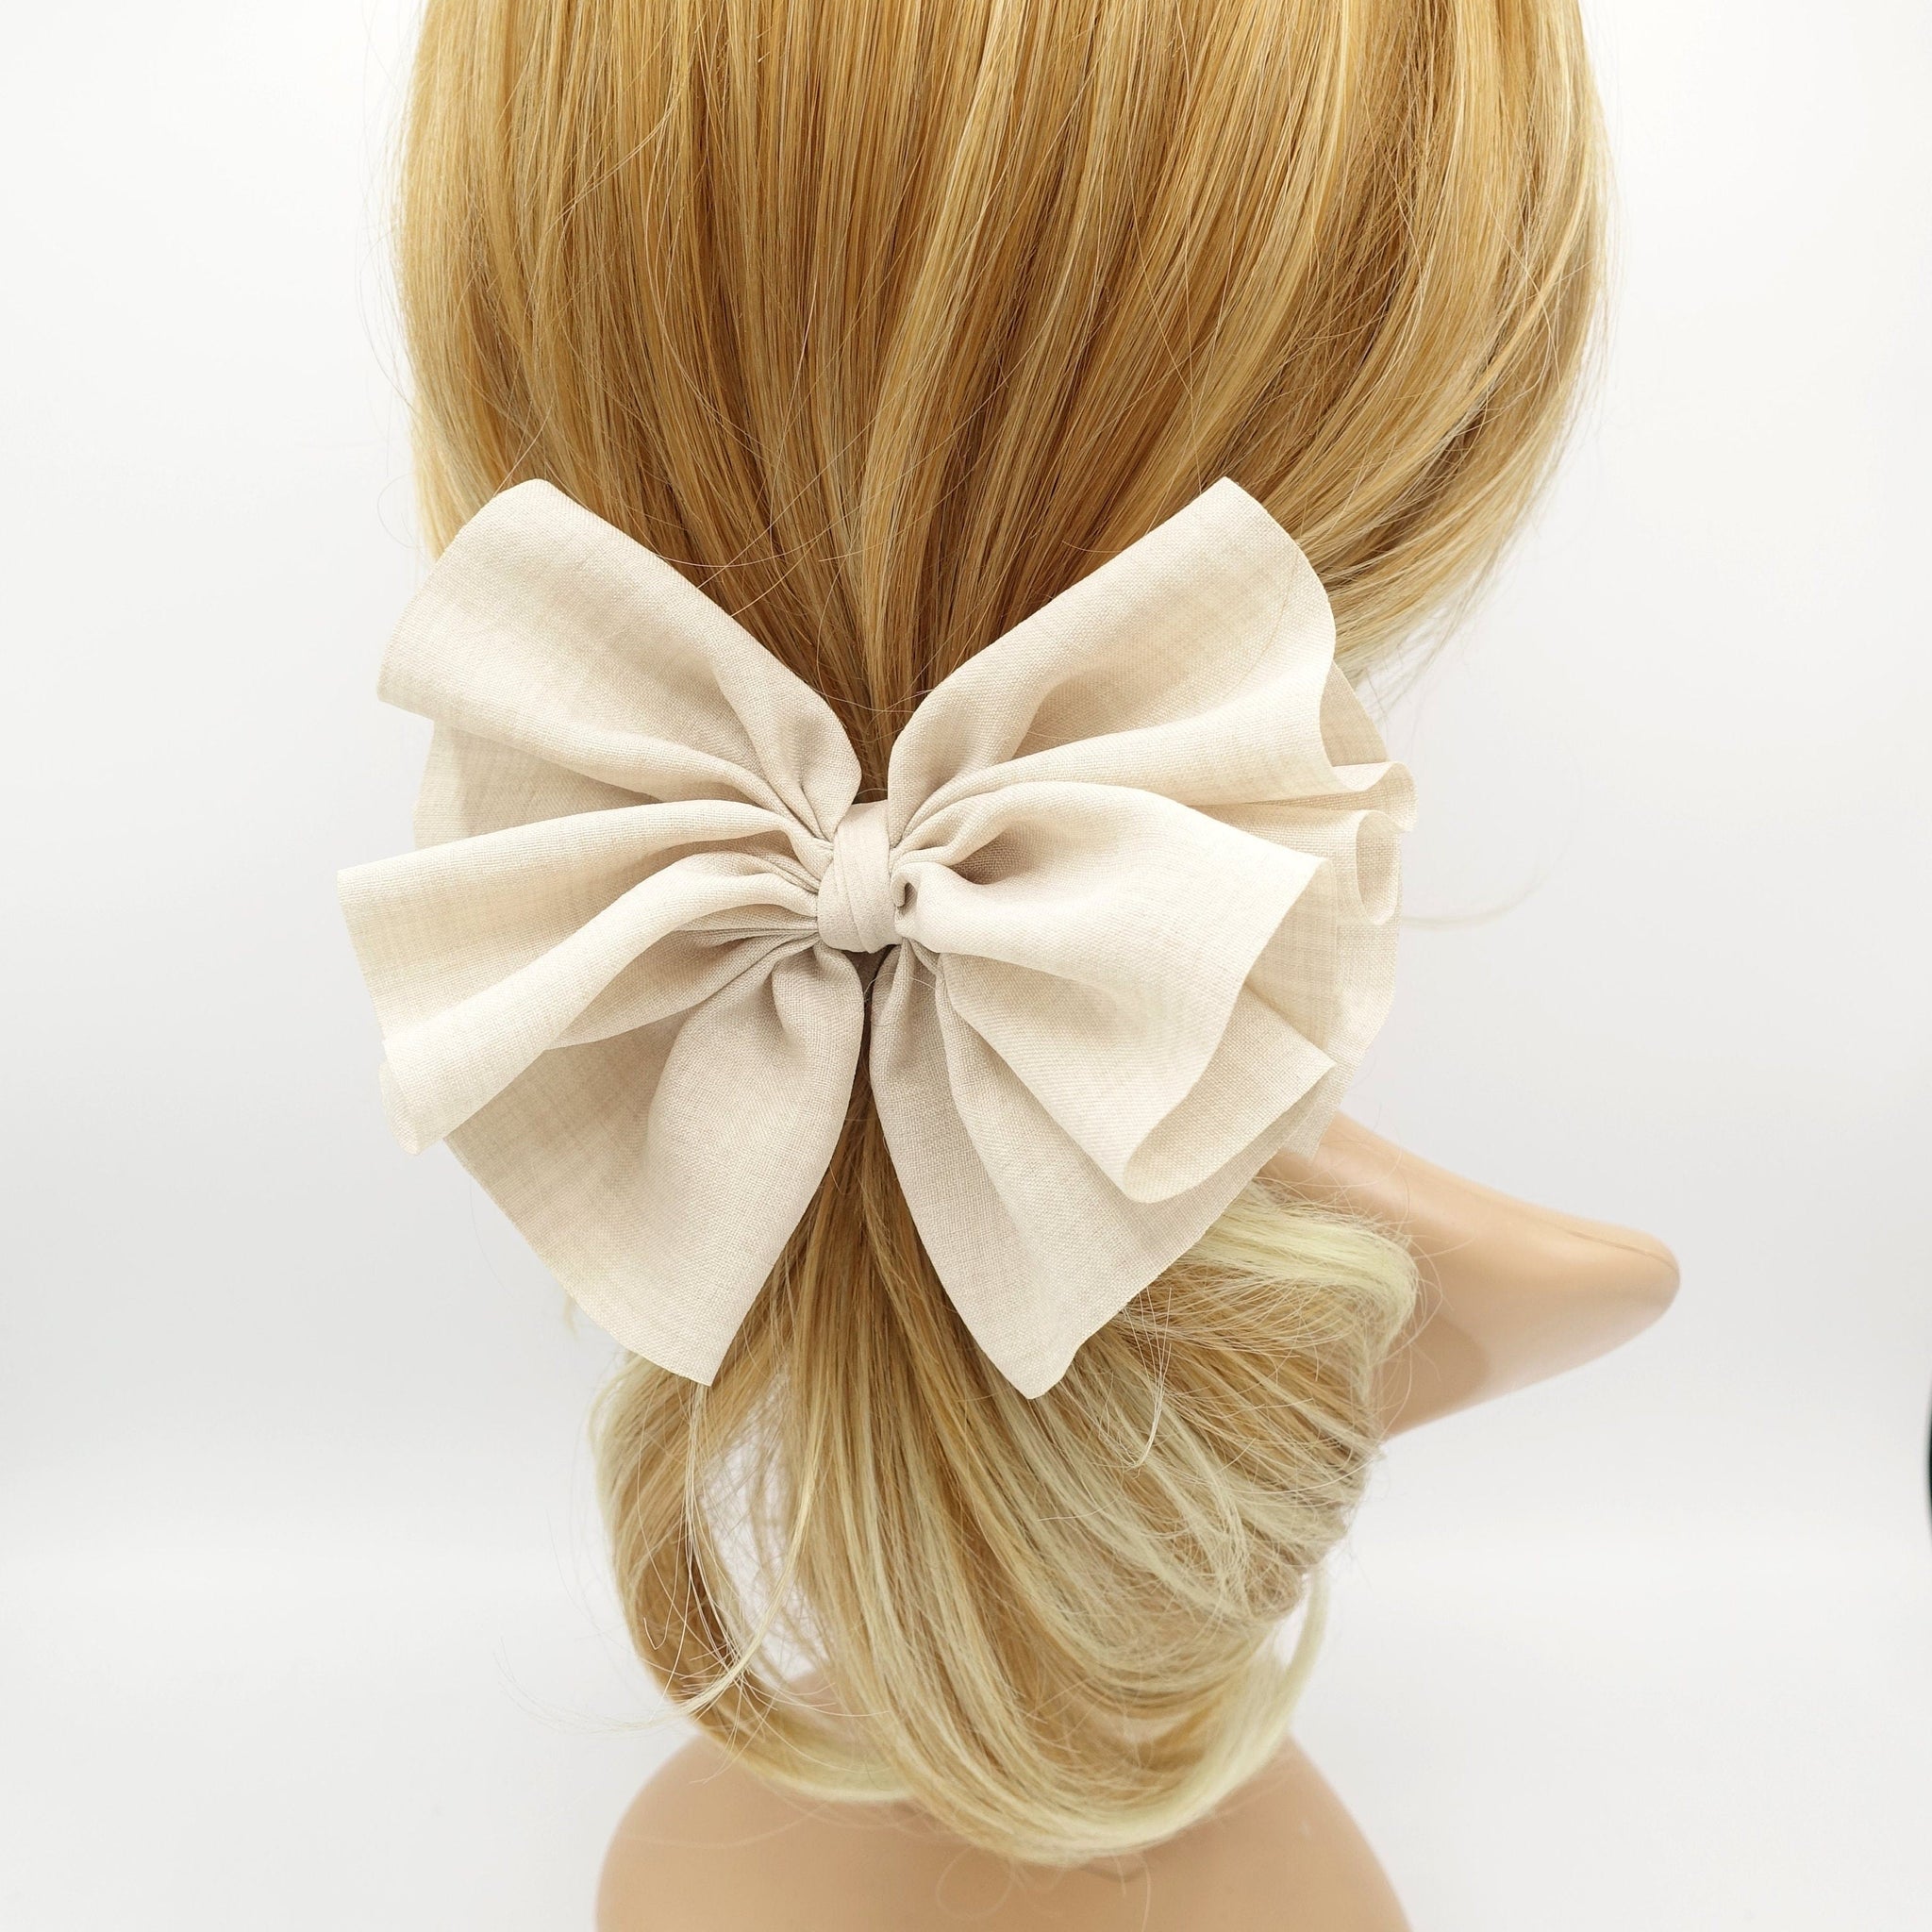 veryshine.com Barrette (Bow) Beige volume pleated hair bow french barrette women hair accessory